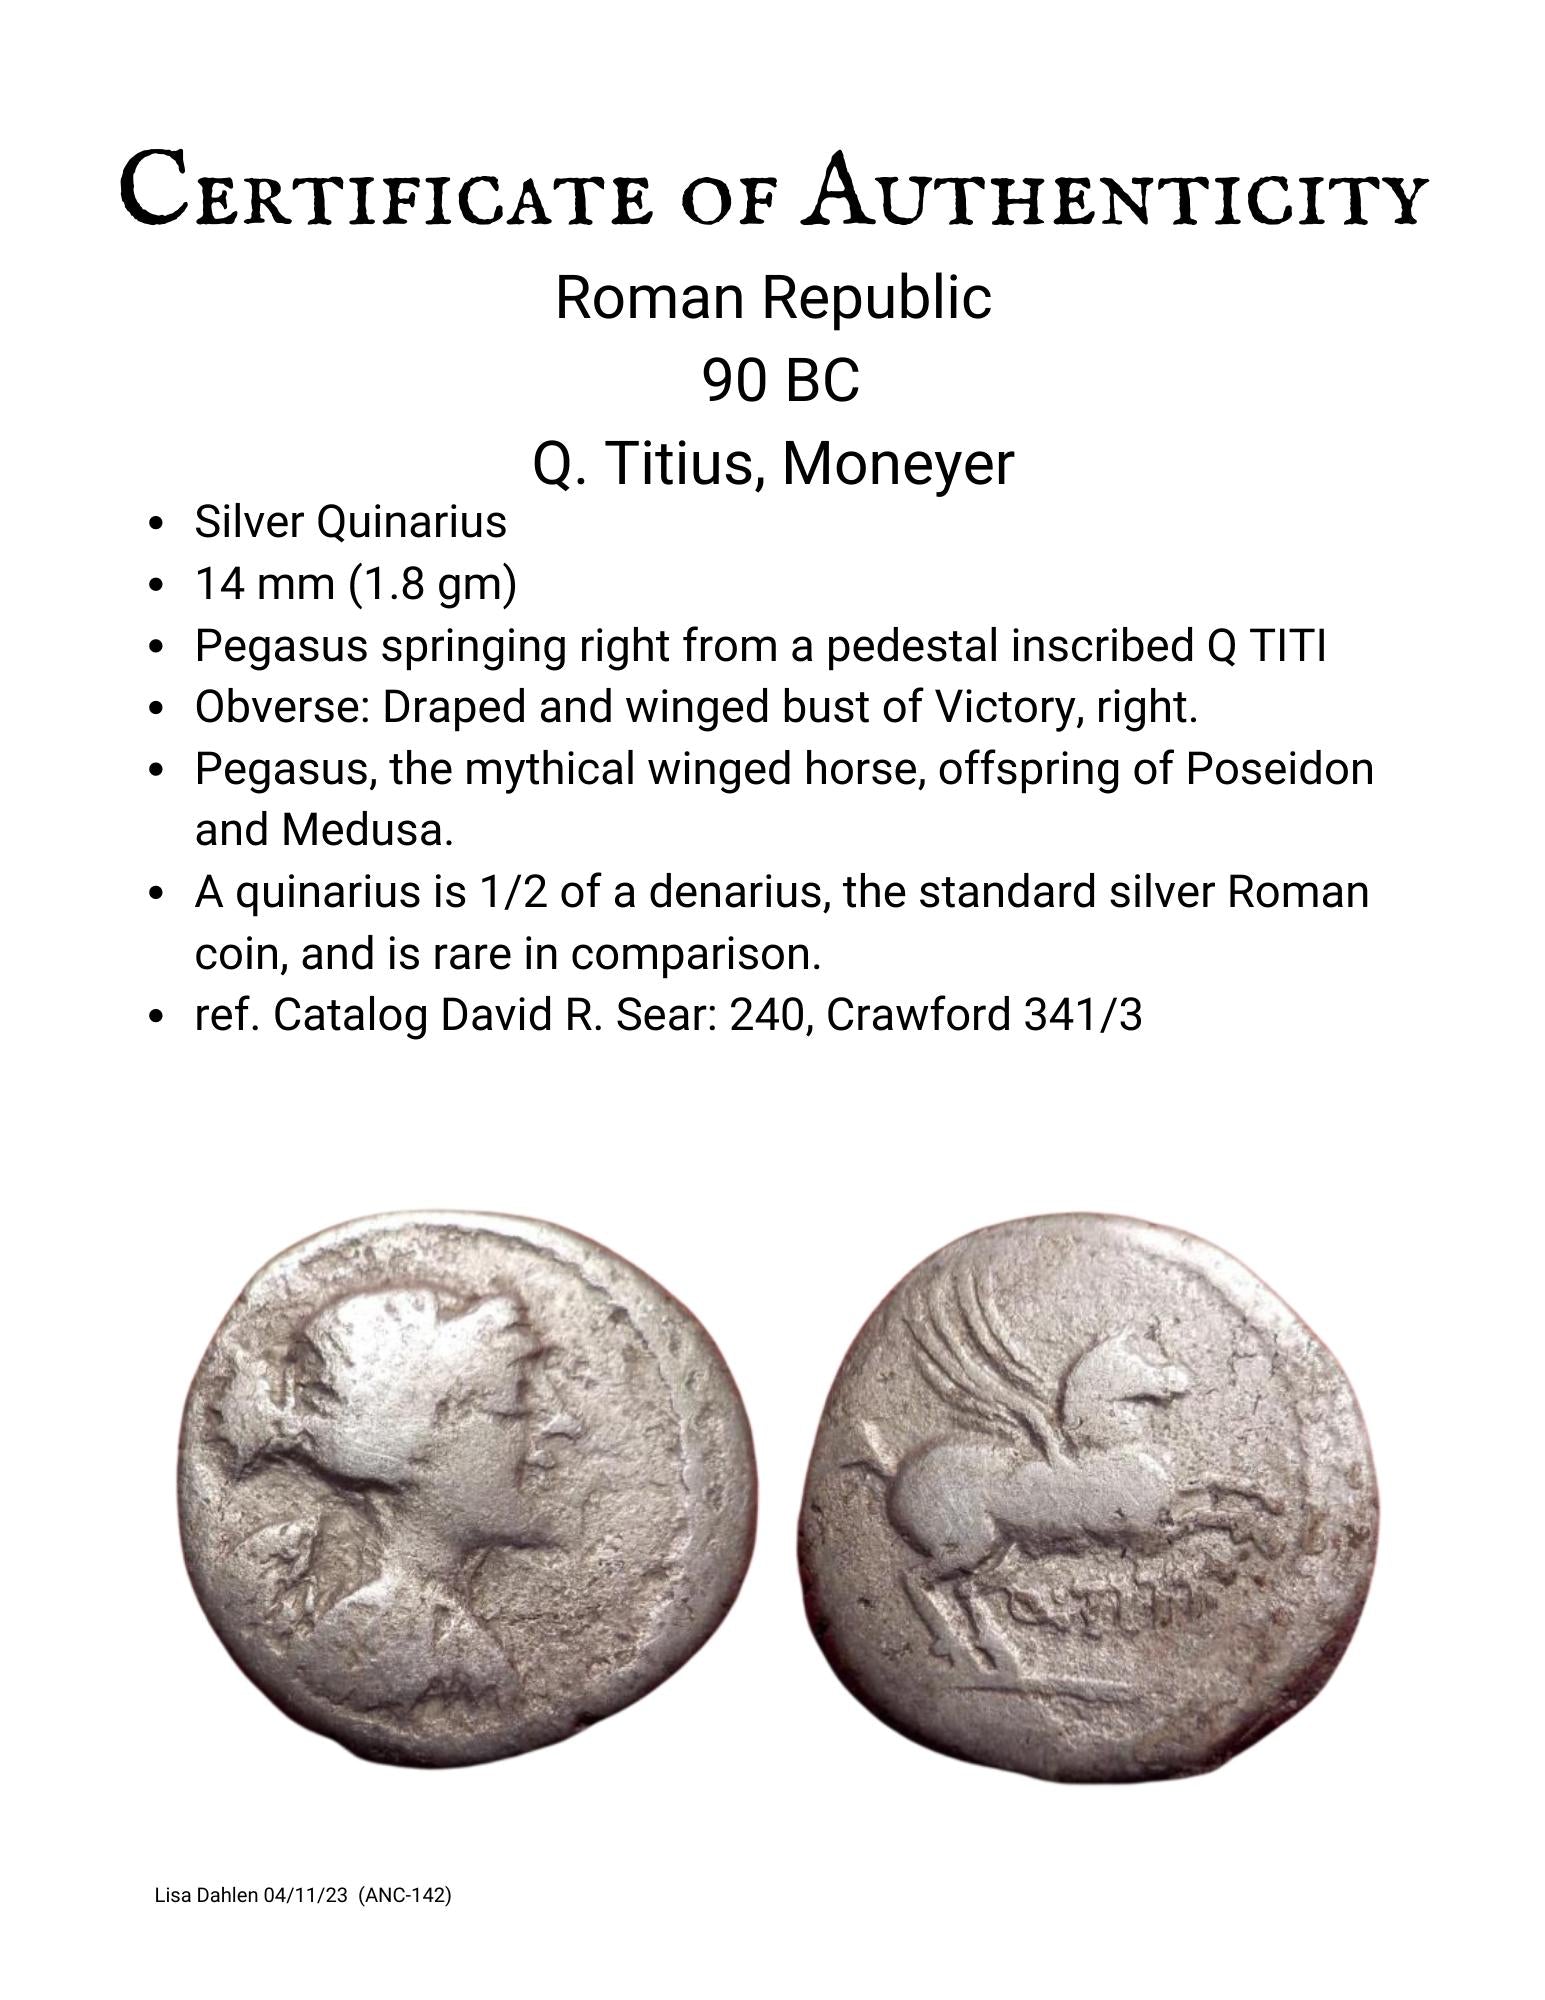 Ancient Roman Republic 90 BC Pegasus silver coin certificate